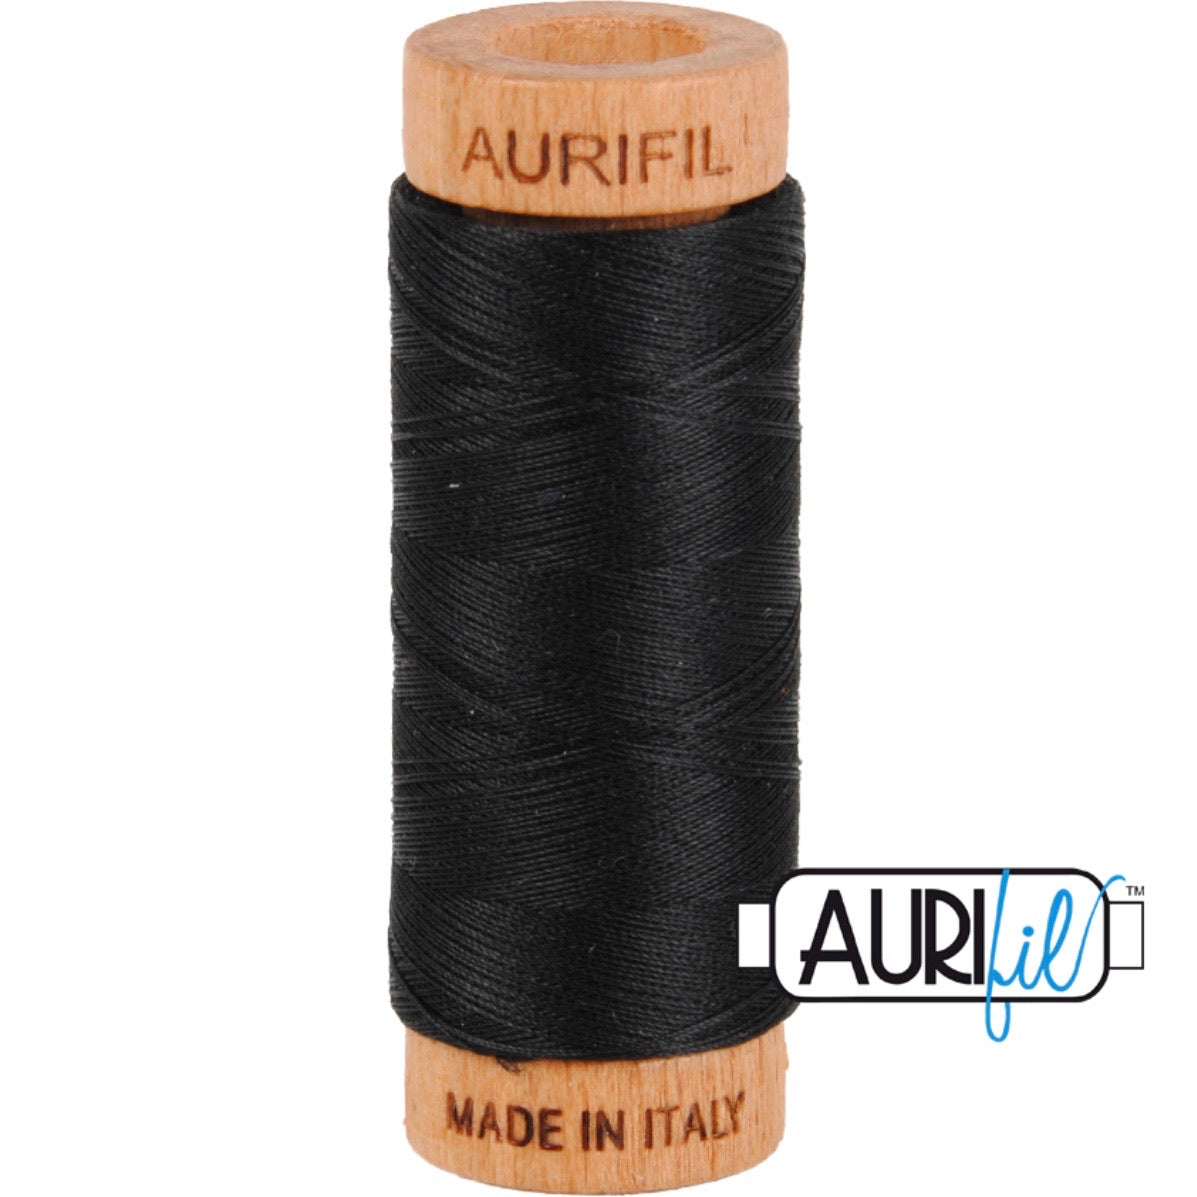 Aurifil Cotton 80wt Thread - 280 mt - 2692 - Black